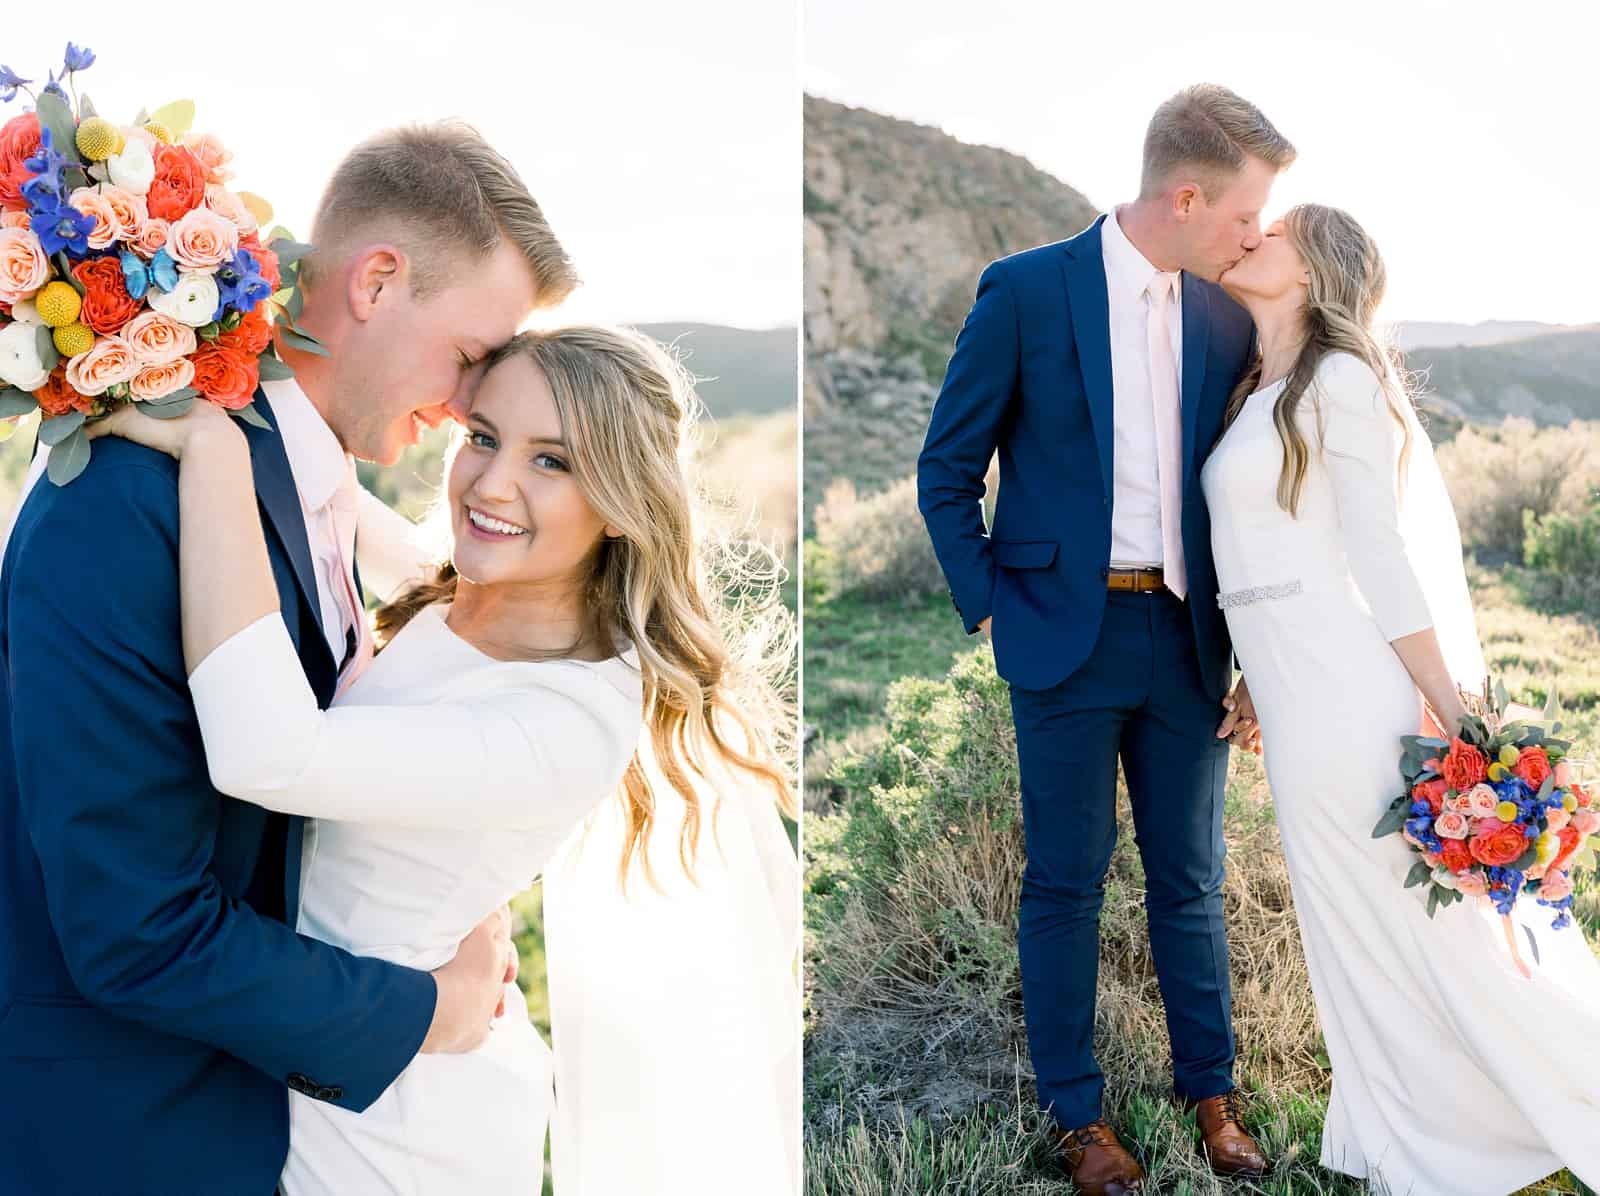 Ireland field, bride and groom, Utah mountains, nature wedding photography, spring wedding